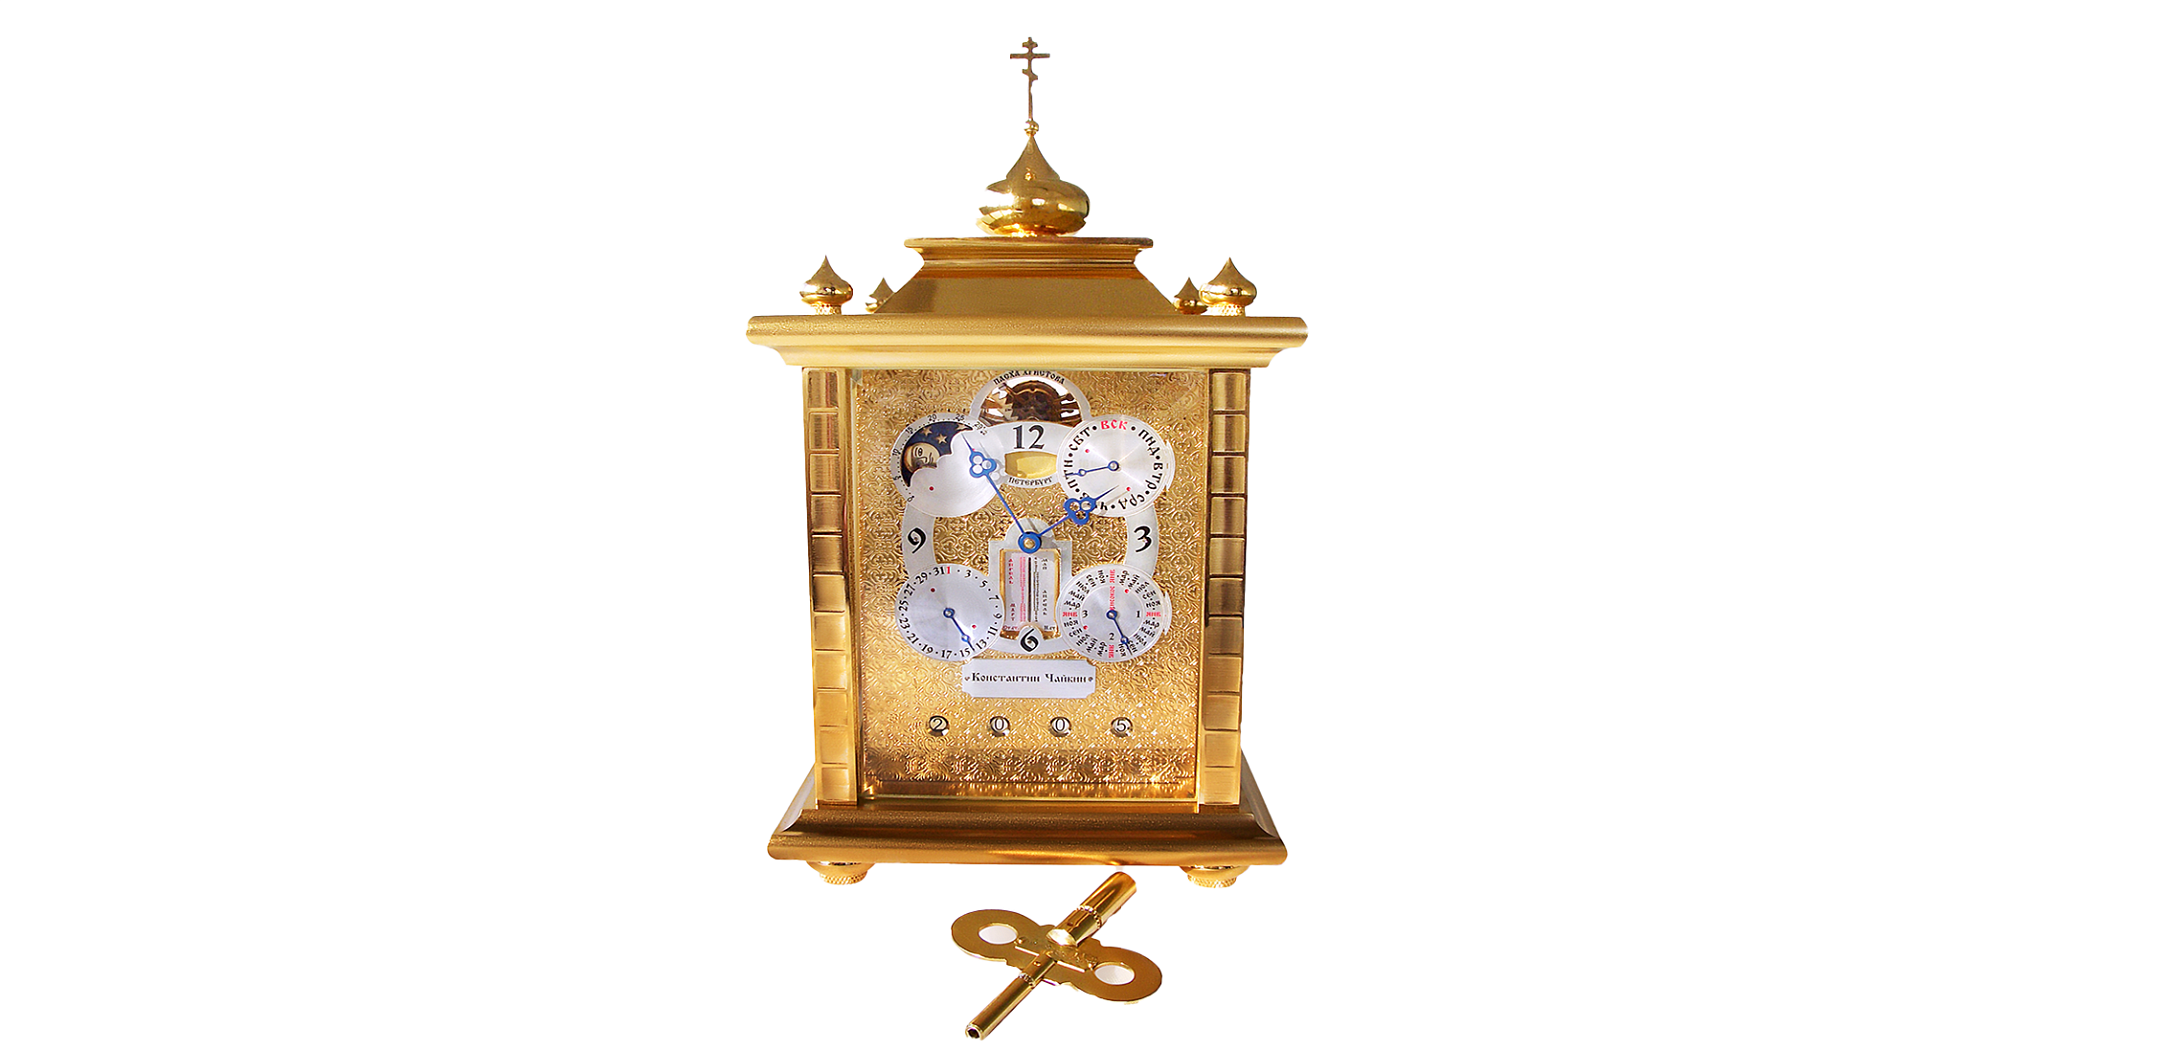 Easter of Christ Computus Clock